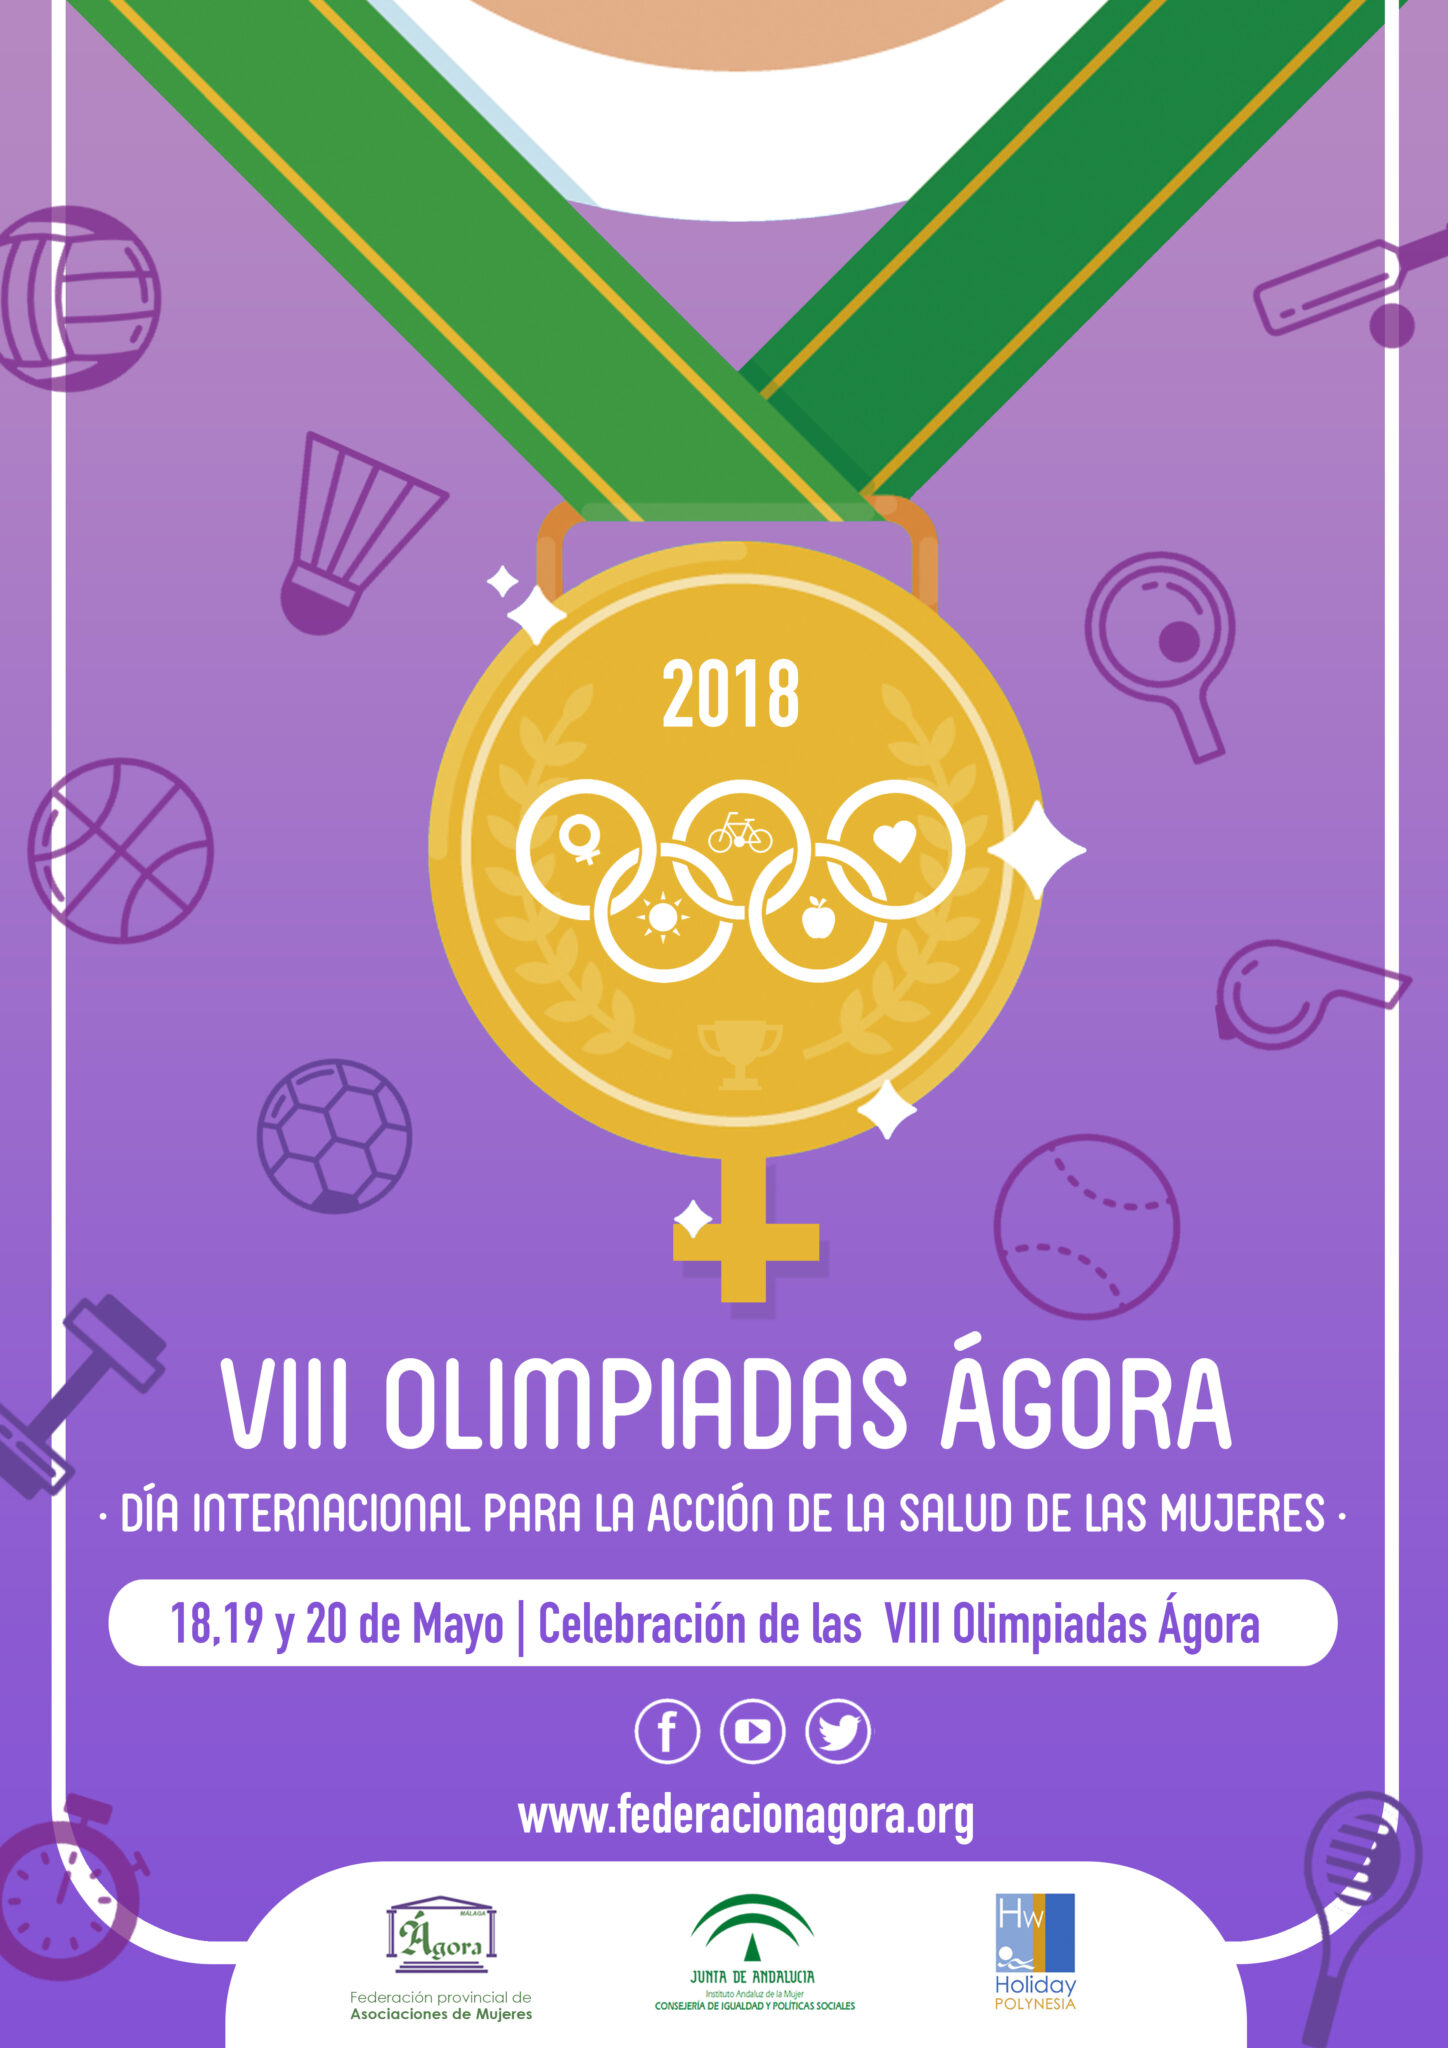 ¡Ya están aquí las VIII Olimpiadas ÁGORA!